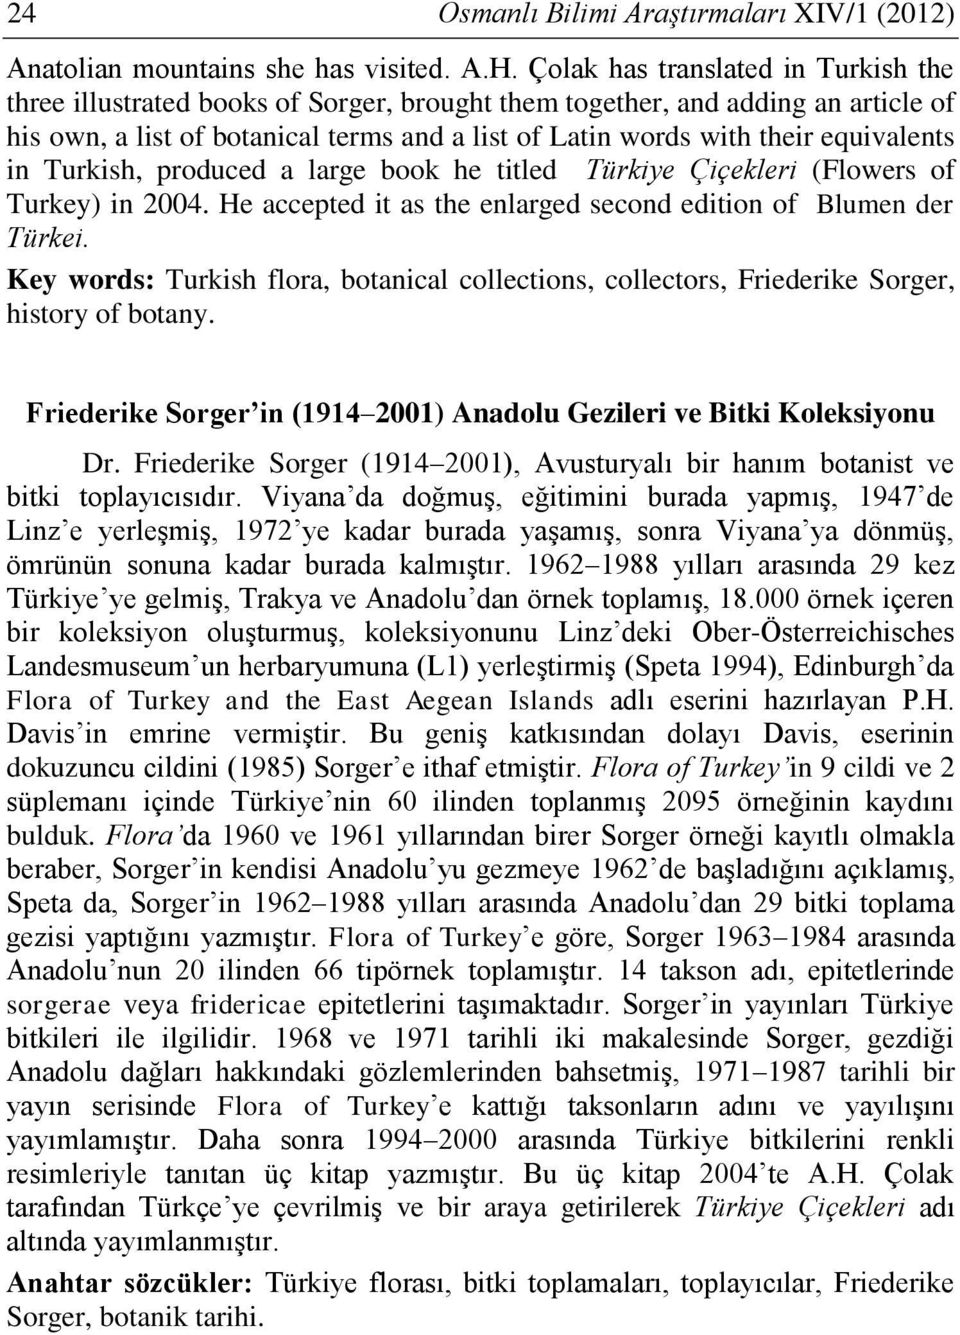 equivalents in Turkish, produced a large book he titled Türkiye Çiçekleri (Flowers of Turkey) in 2004. He accepted it as the enlarged second edition of Blumen der Türkei.